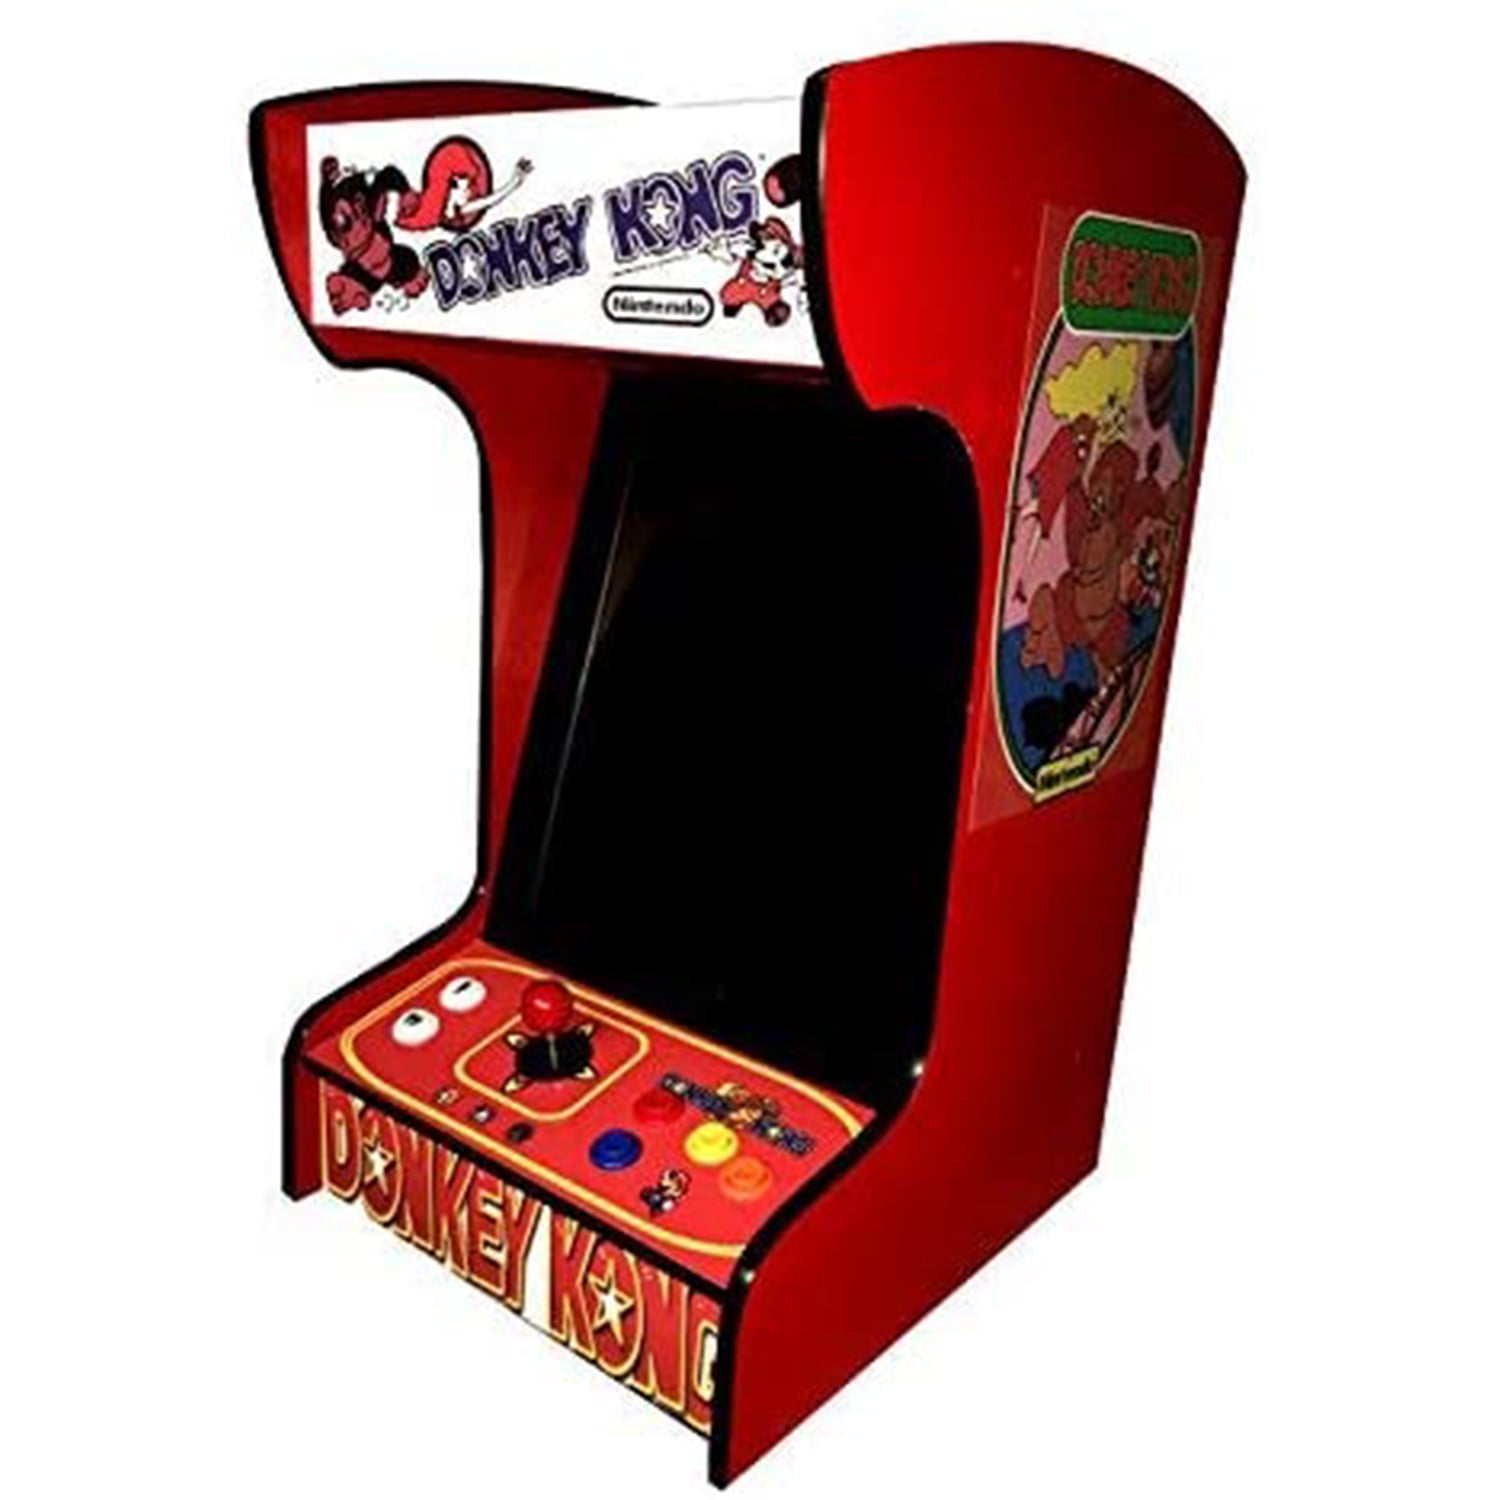 donkey kong arcade game